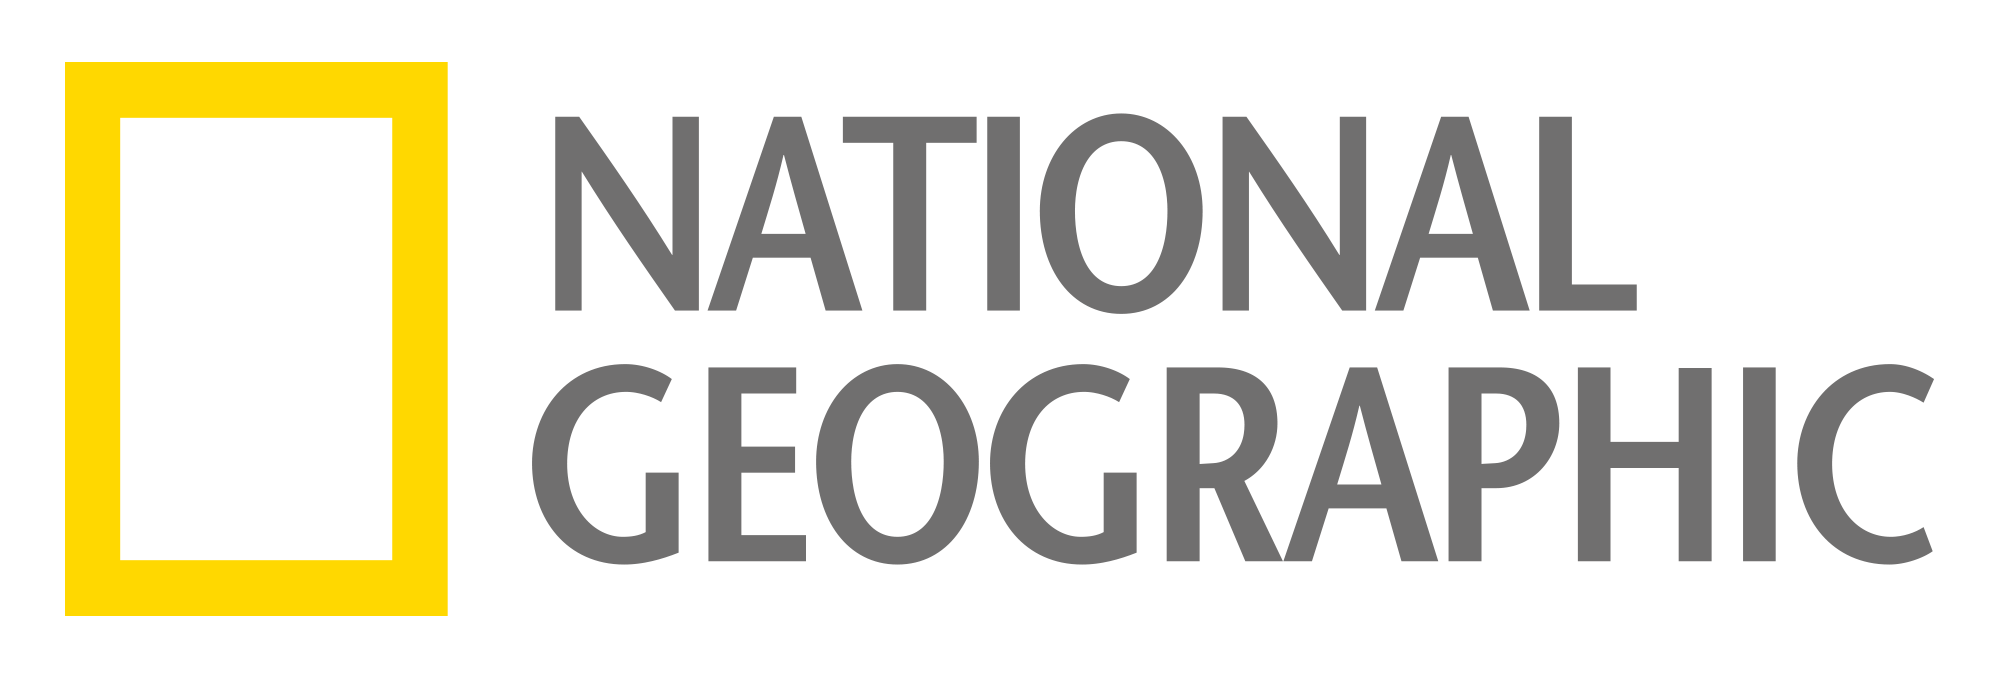 Ng_Logo_Gray.png - National Geographic, Transparent background PNG HD thumbnail